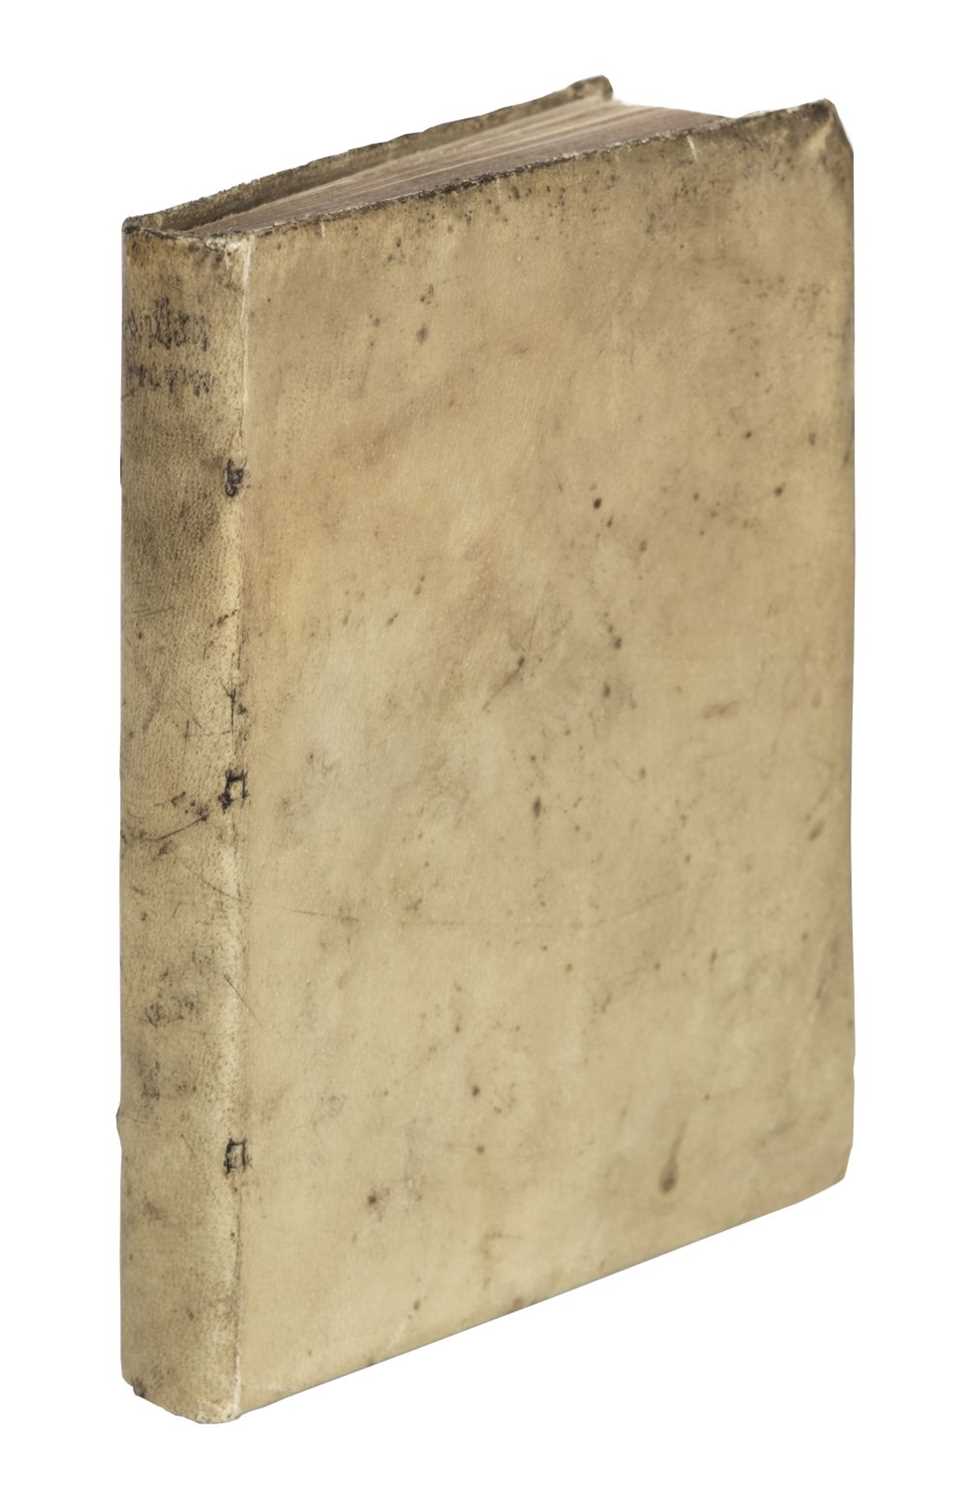 375 - Lyndwood (William). Constitutiones provinciales ecclesiae Anglica[na]e, Wynkyn de Worde, 1499